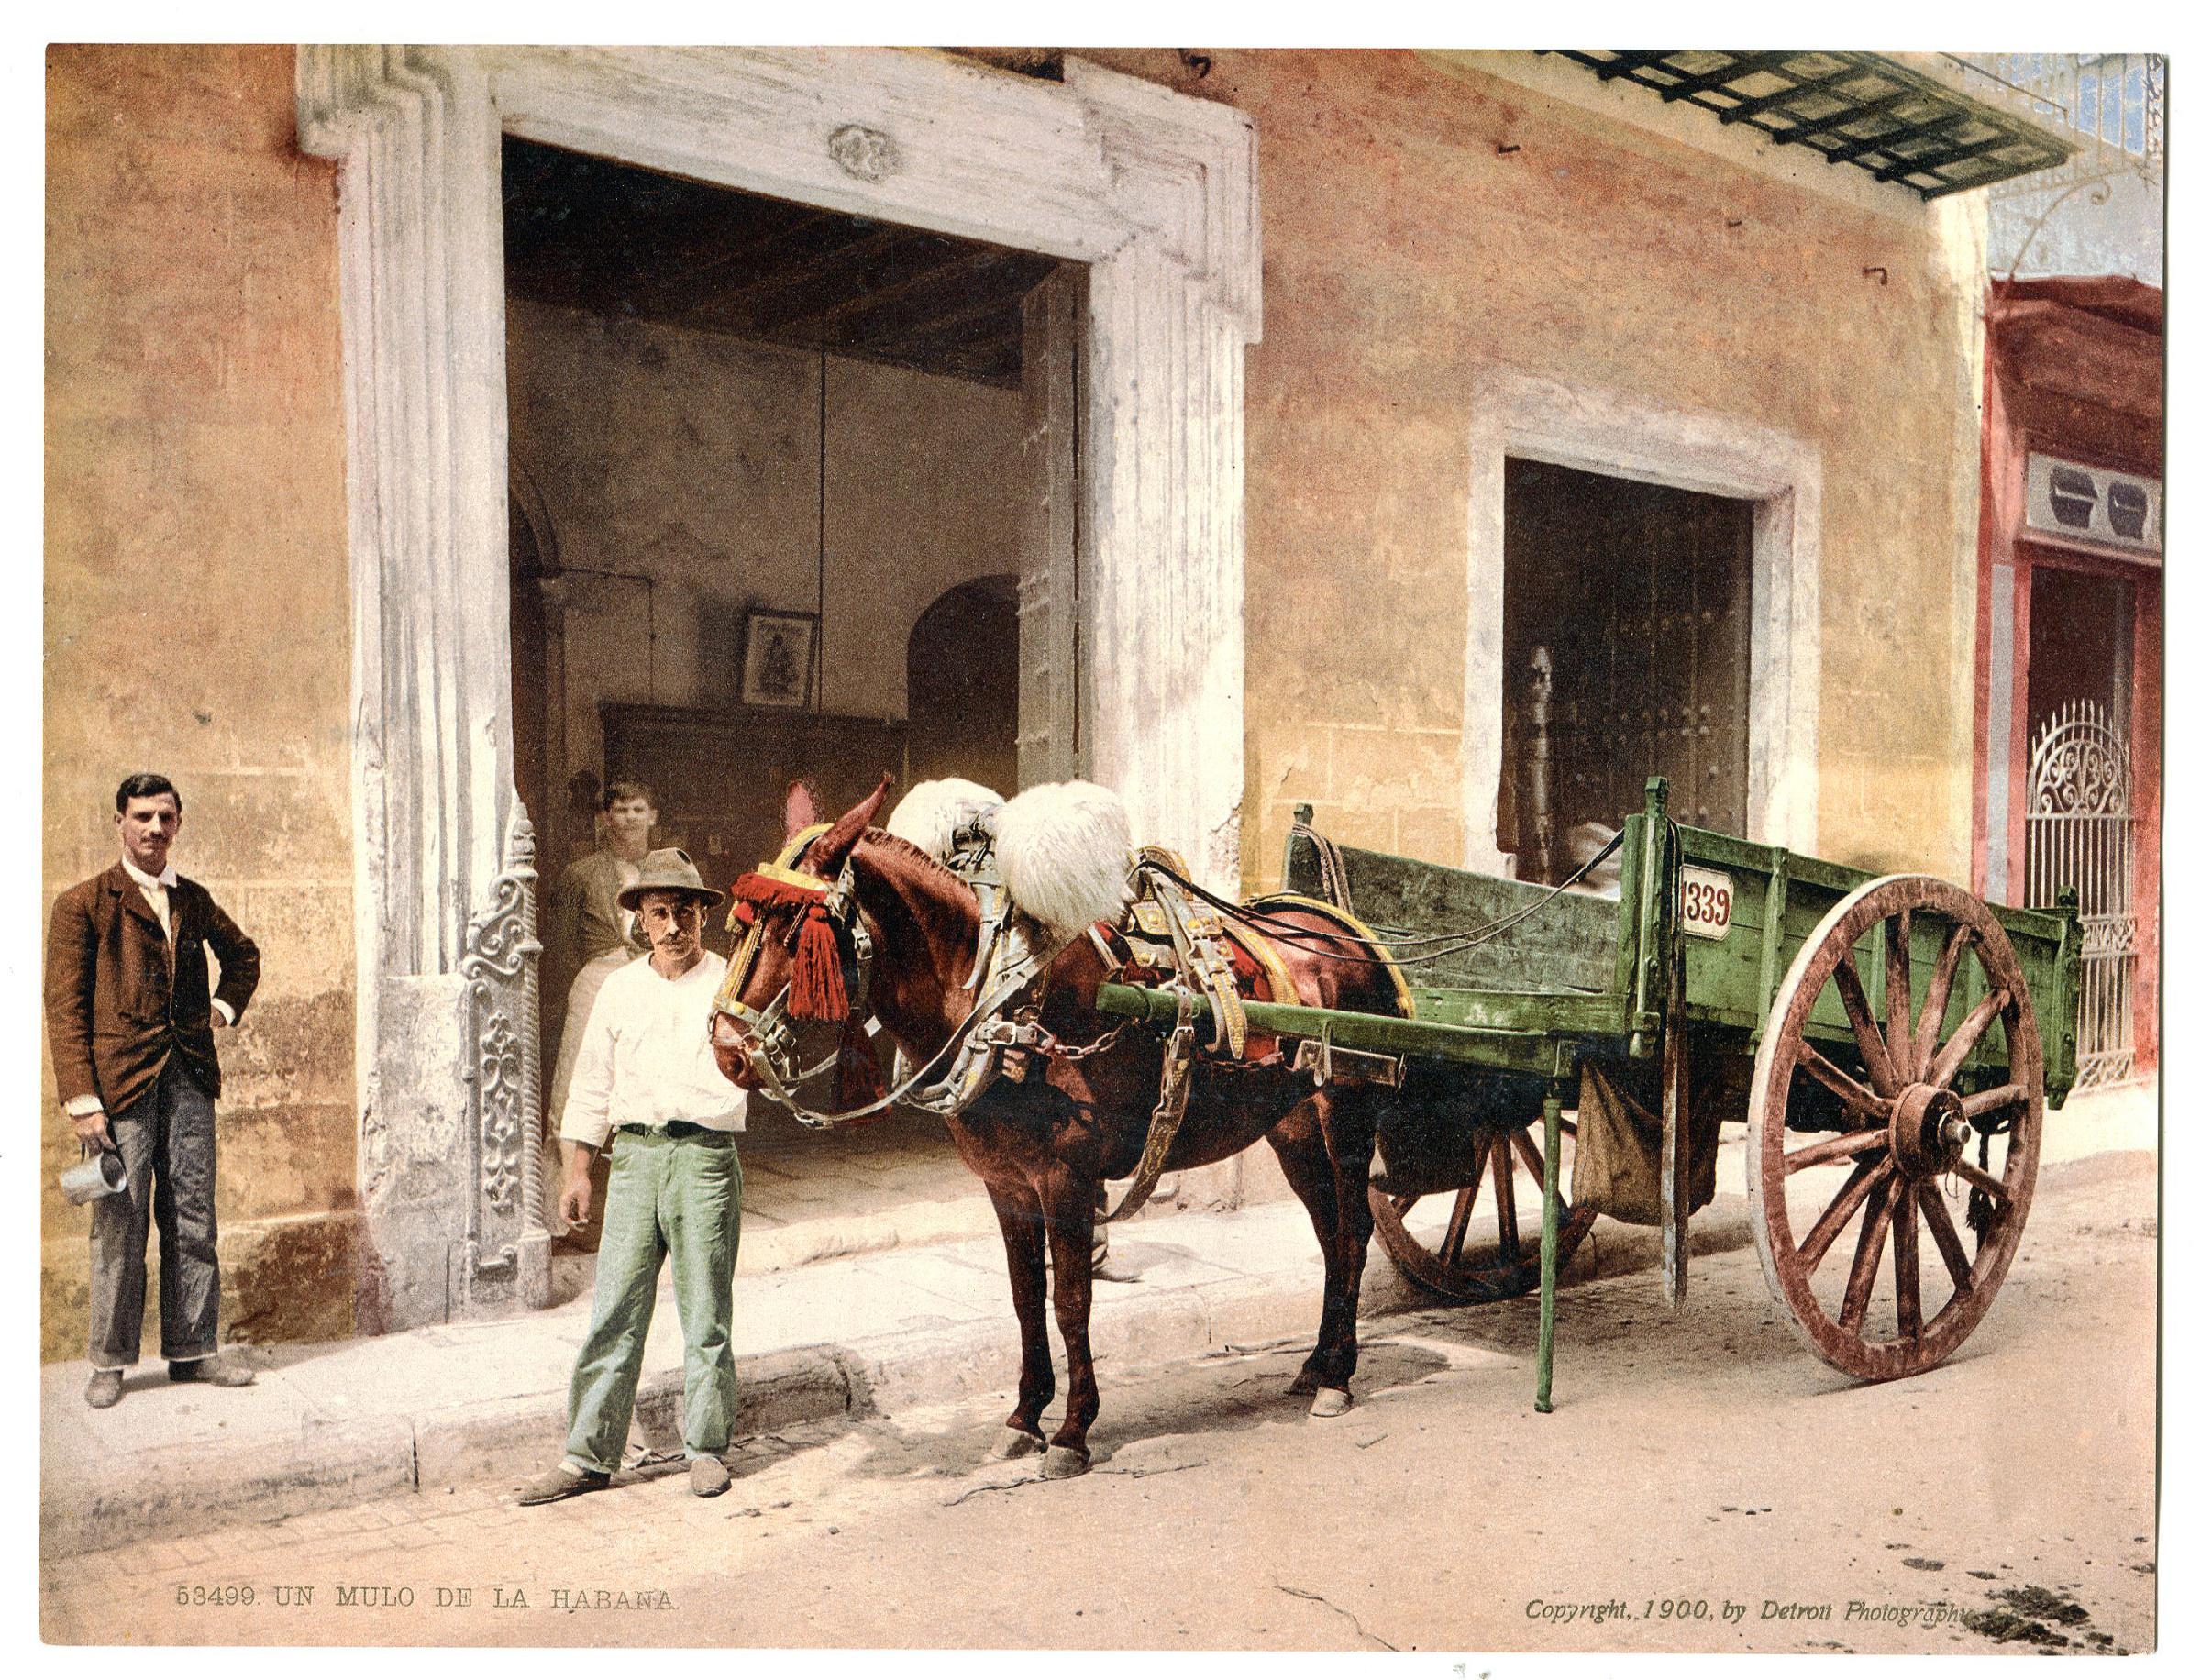 Havana, 1900